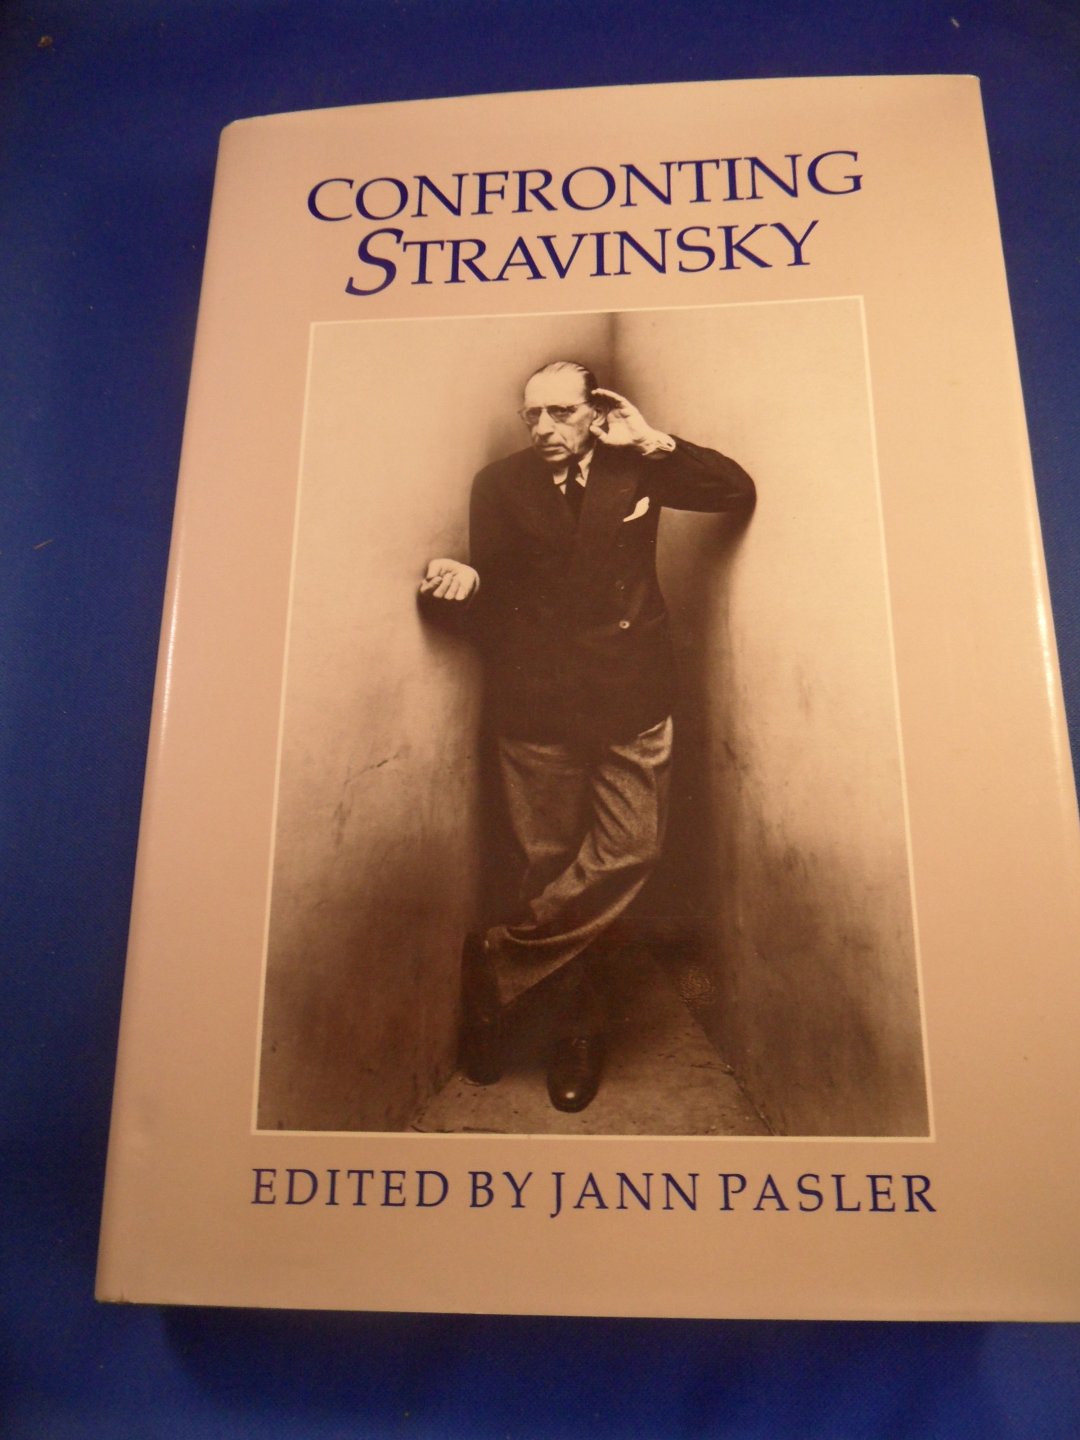 Pasler, Jann - Confronting Stravinsky, man musician and modernist